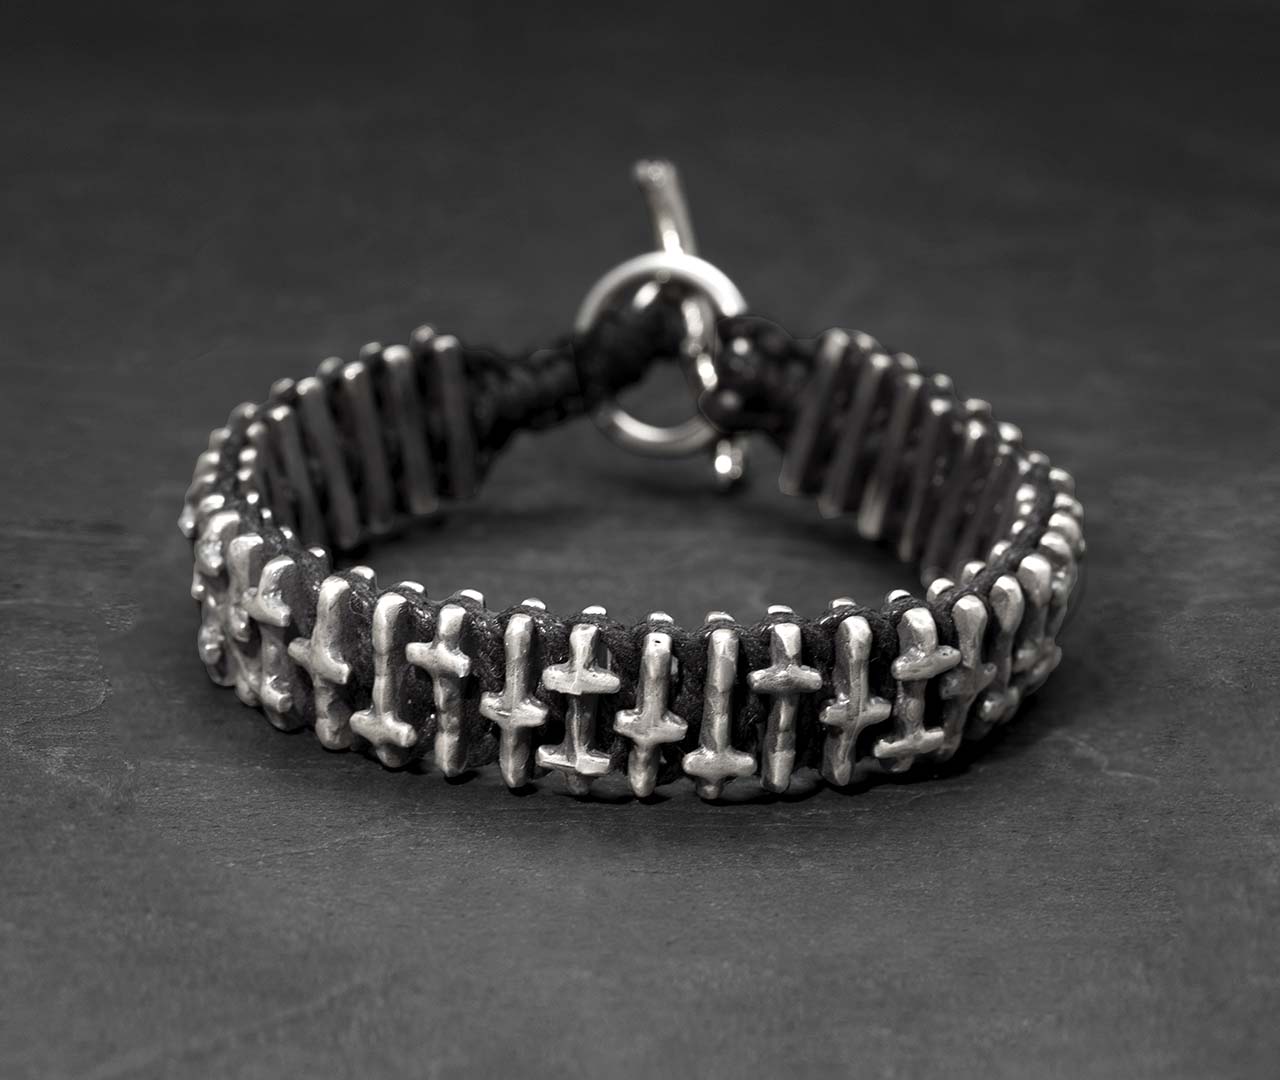 Crossed beads macramé bracelet